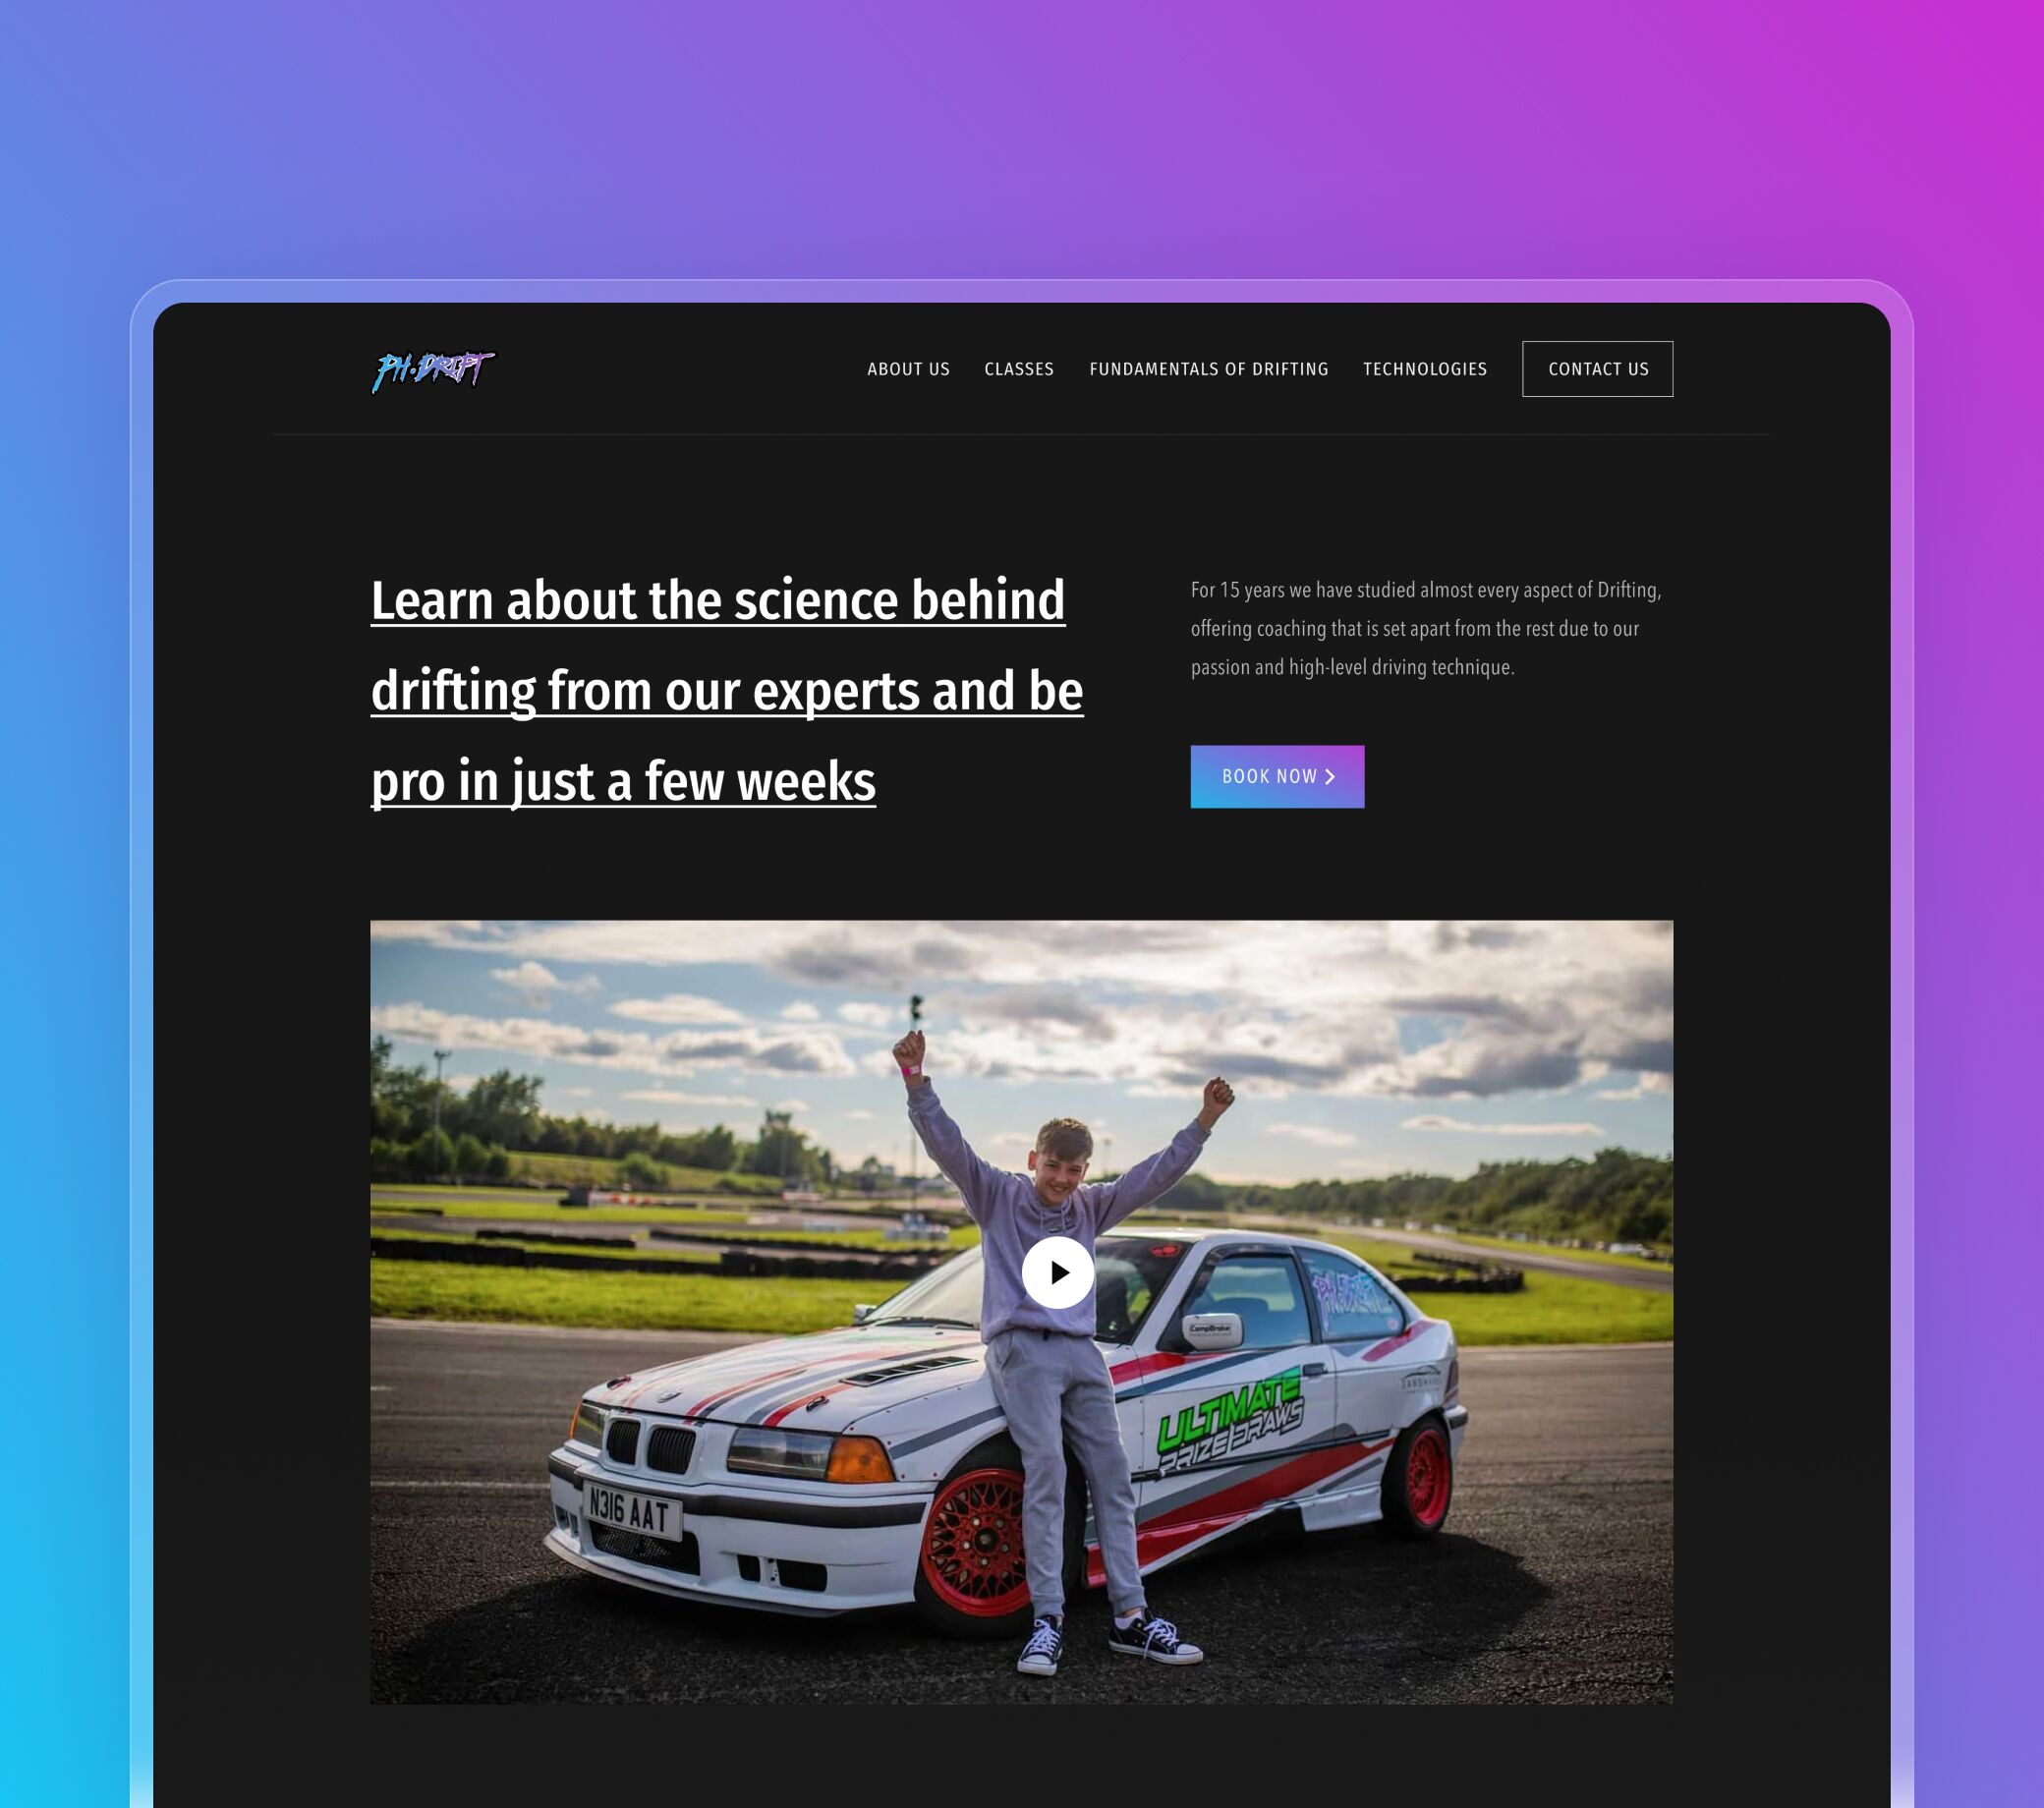 New website and branding for PHDrift, a popular drifting academy